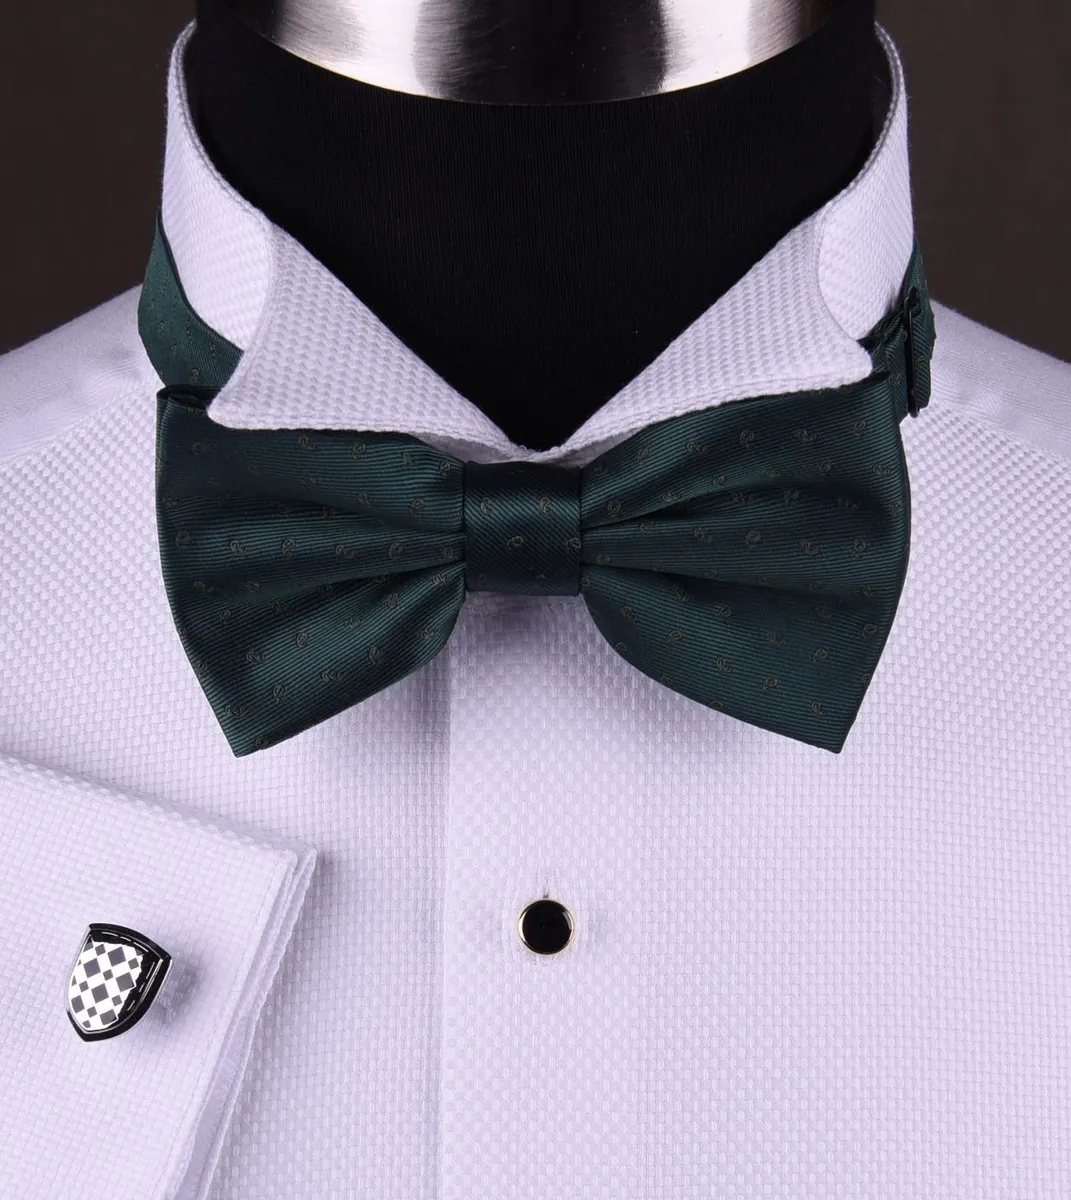 White Luxury Tuxedo Formal Wedding Evening Dinner Black Bow Tie | eBay